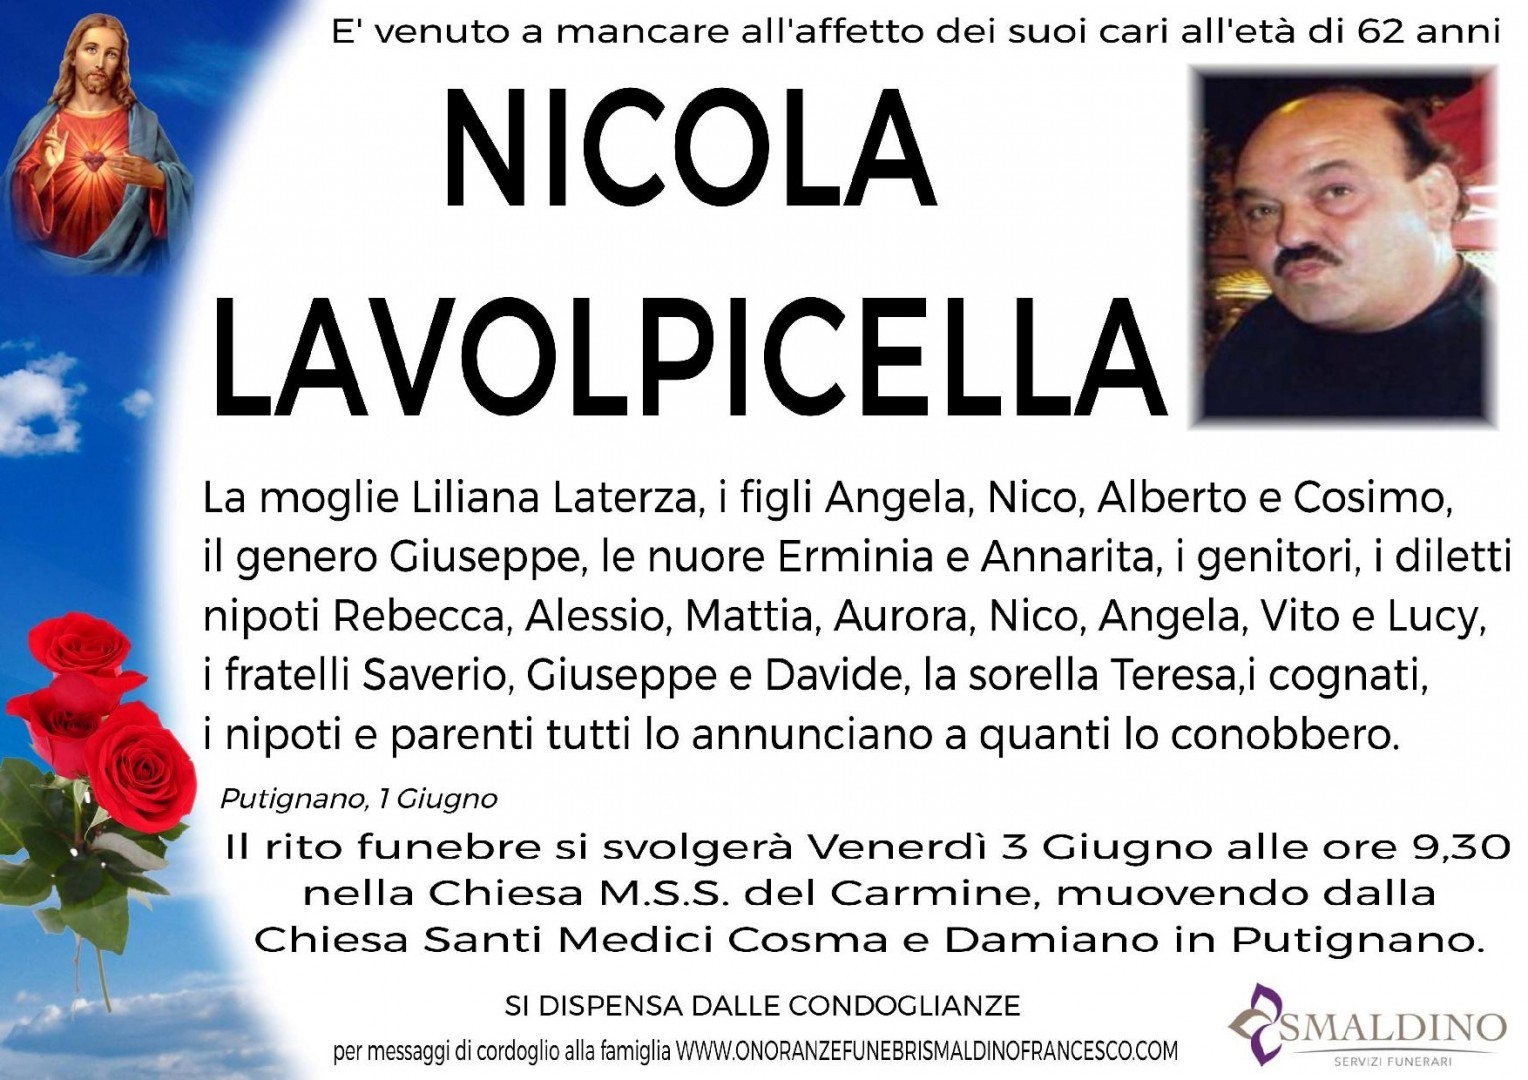 Nicola Lavolpicella